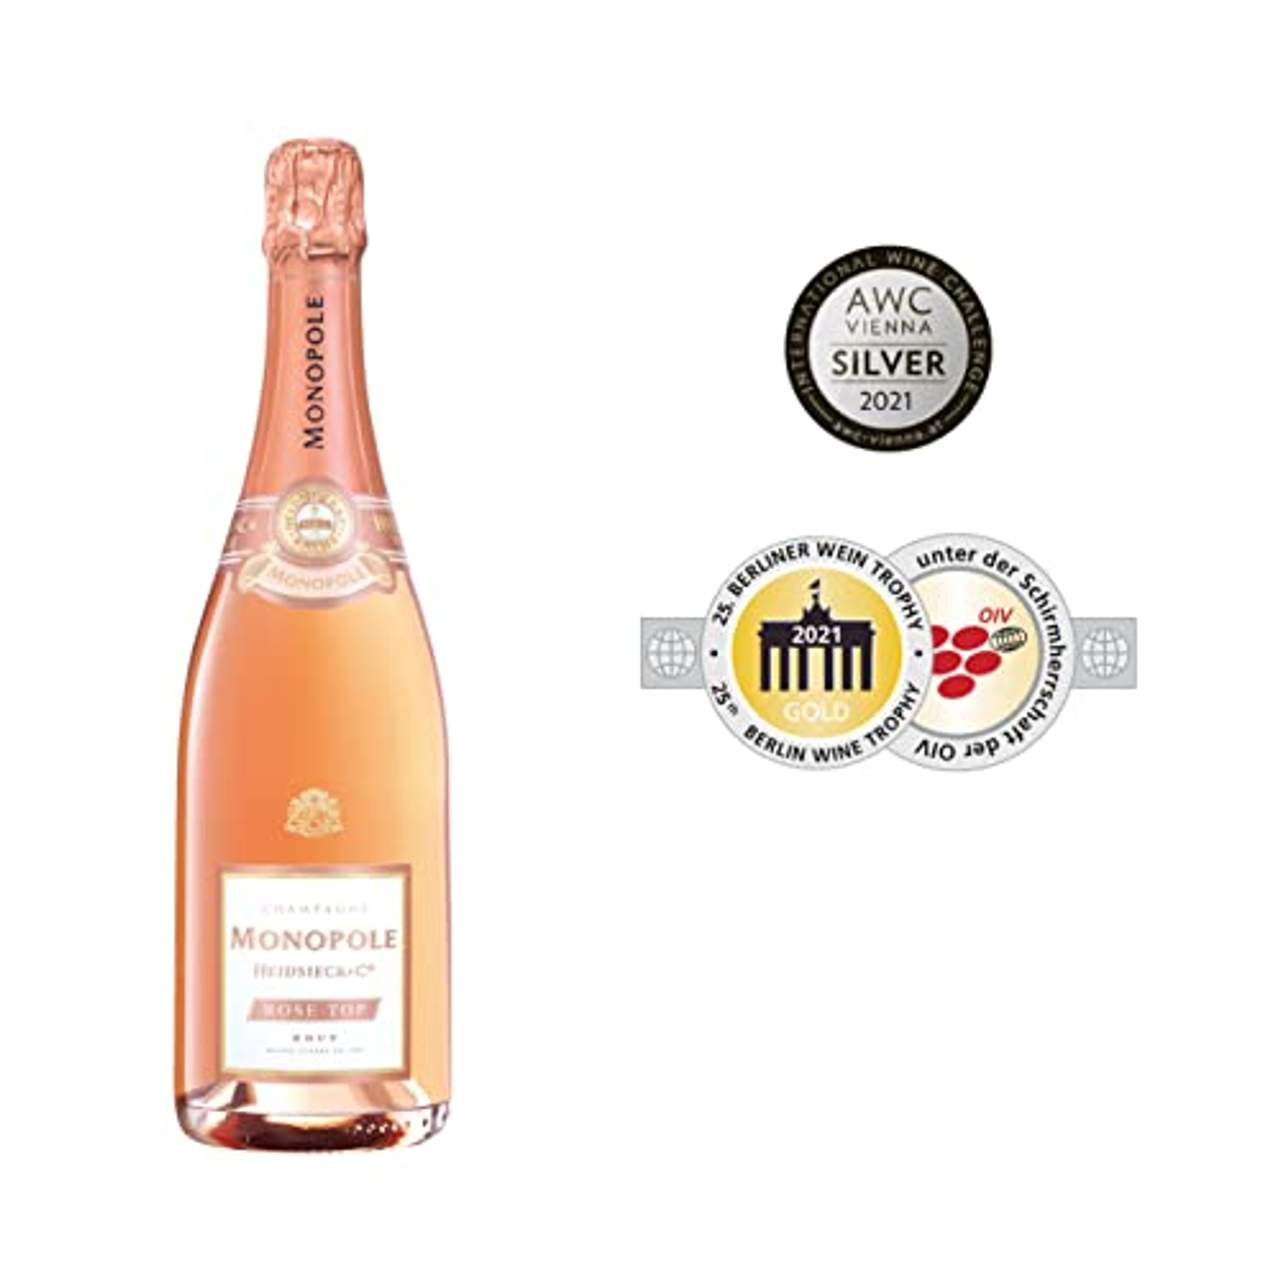 Heidsieck & Co Monopole Rosé Top Brut Champagner